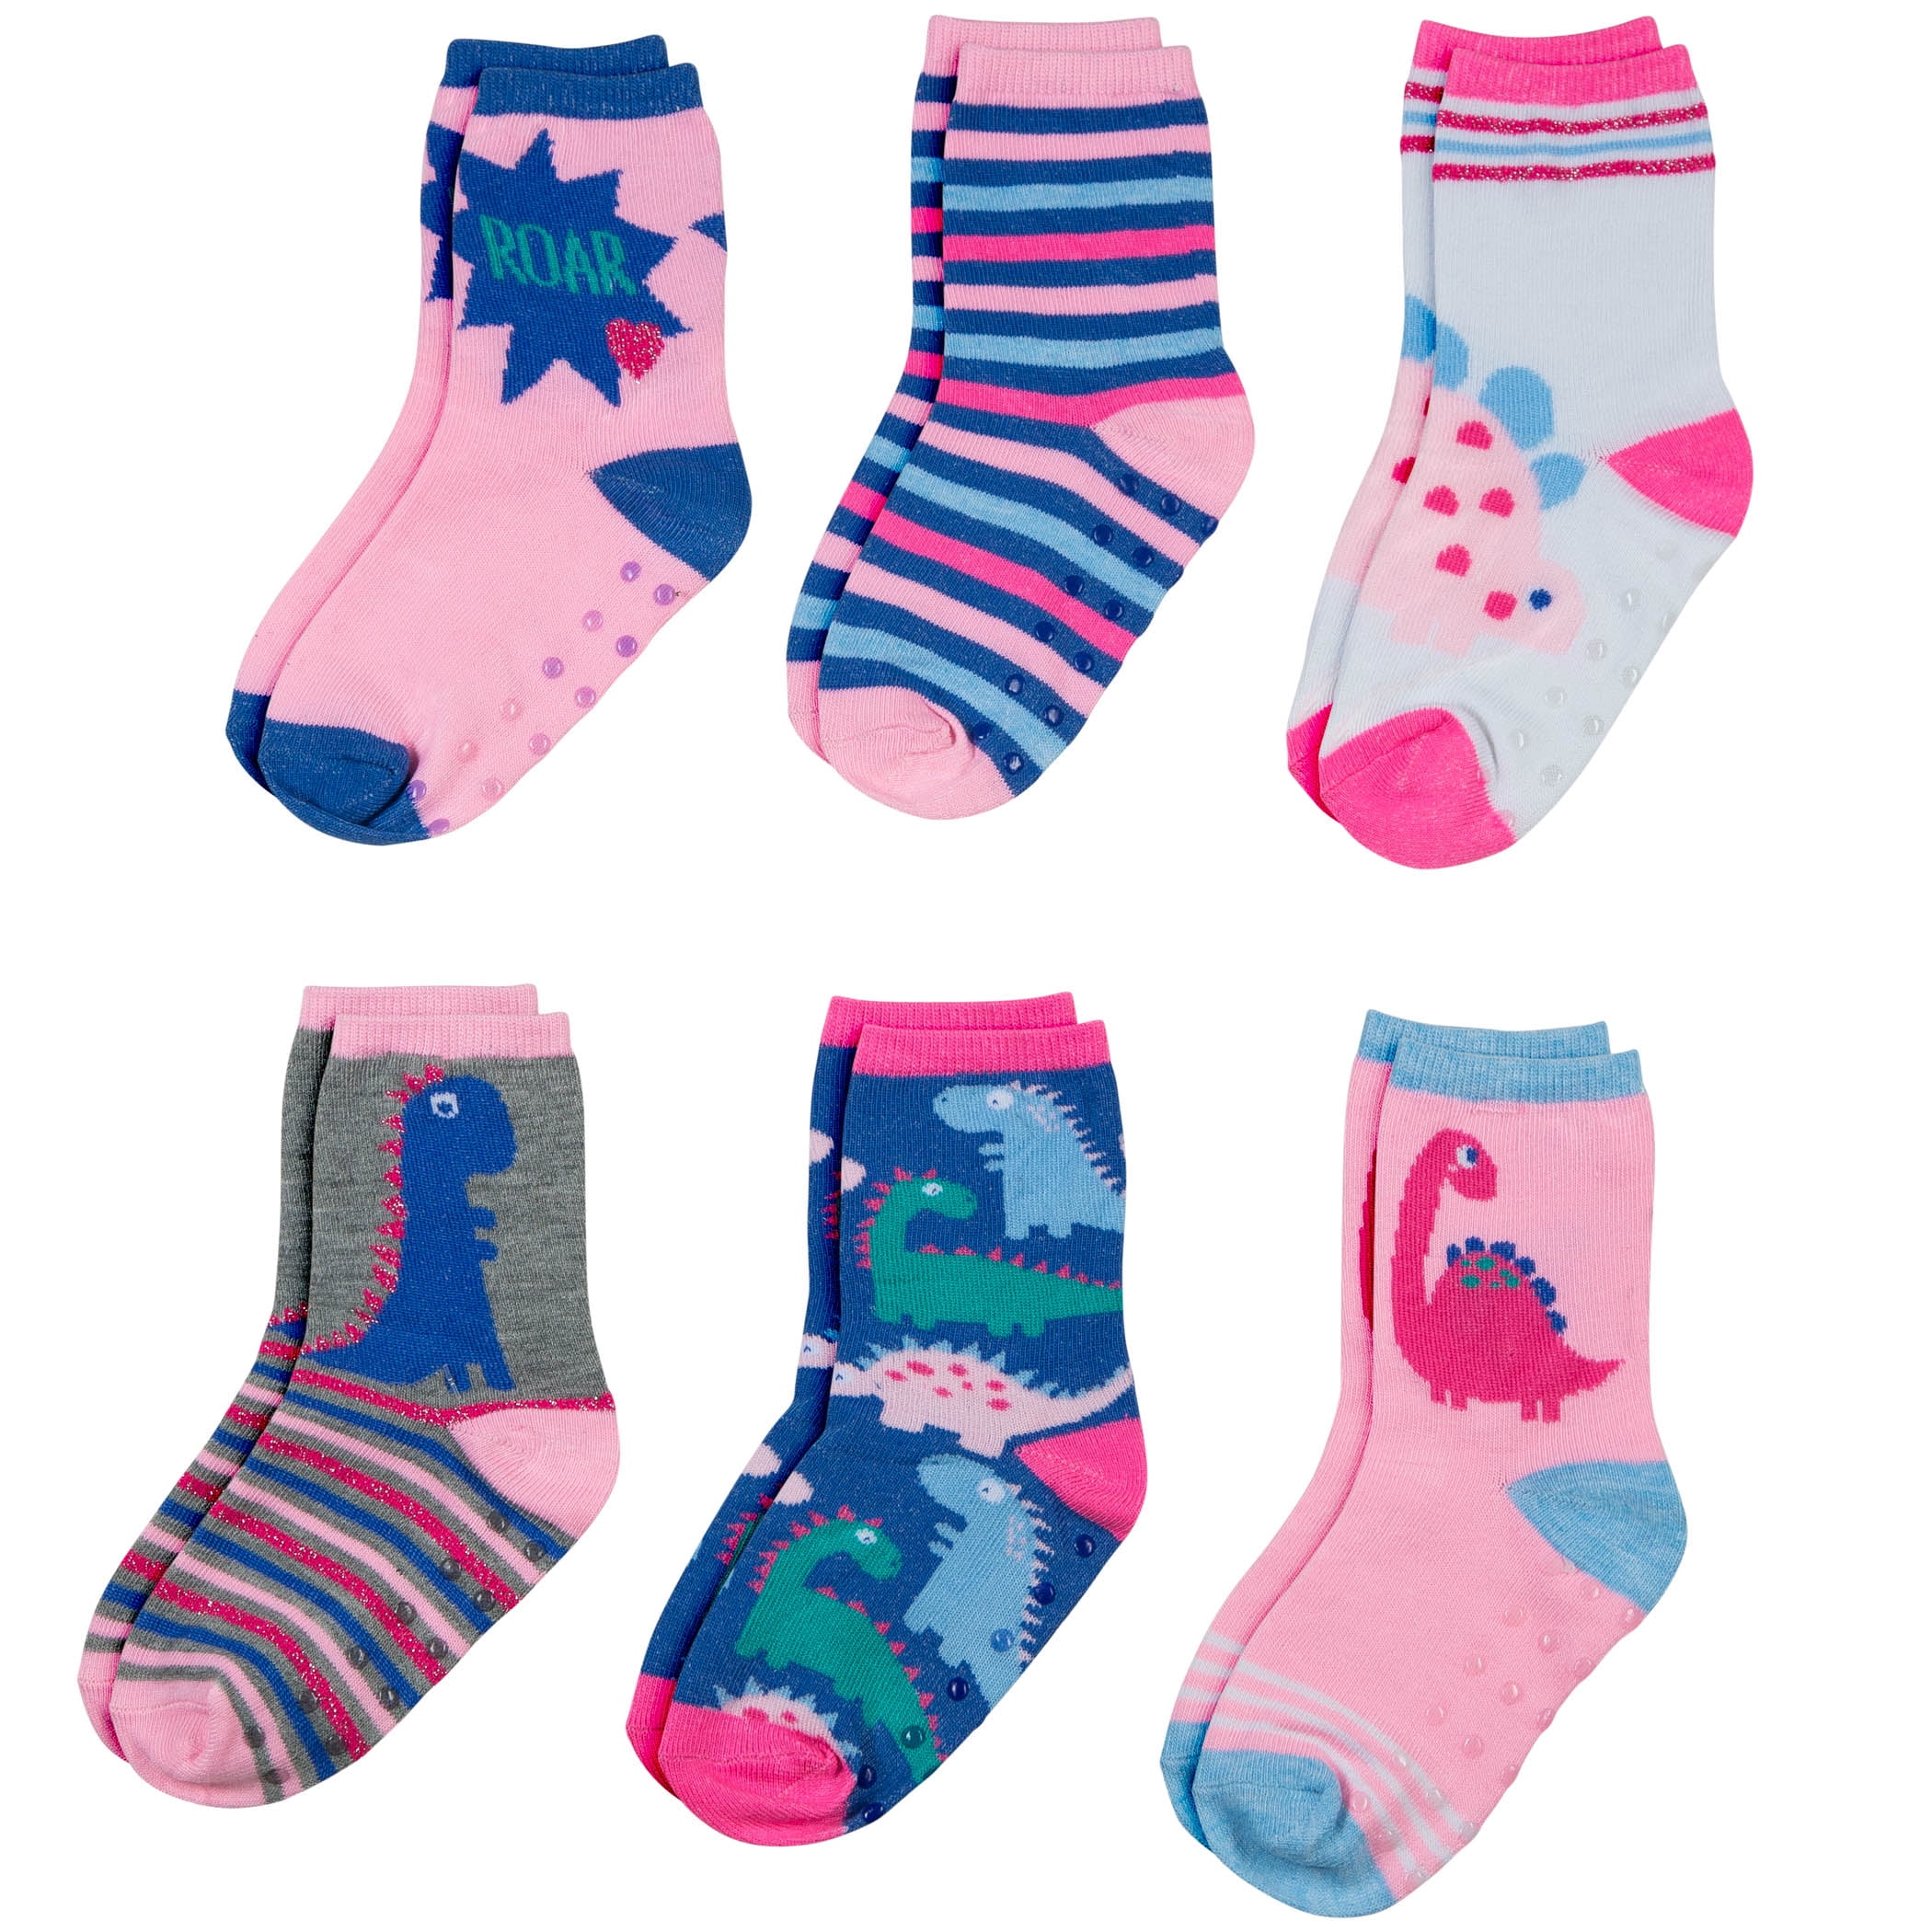 Jefferies Socks Infant Baby "I Love Grandma" Blue Pink Socks 3 Pair Pack 